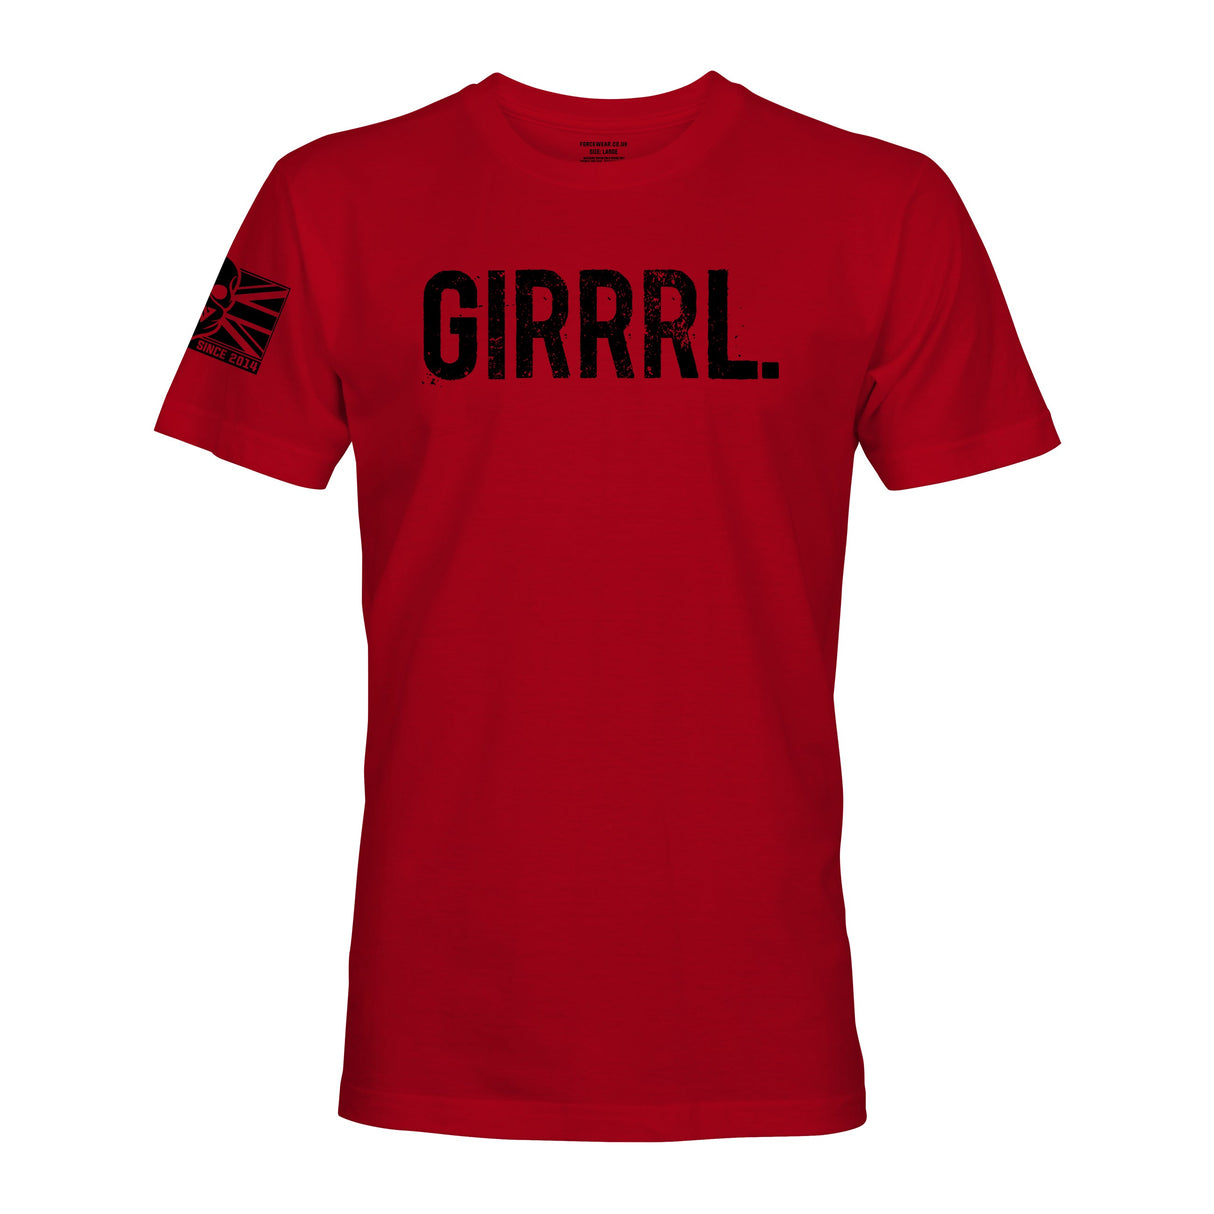 GIRRRL. - Force Wear HQ - T-SHIRTS